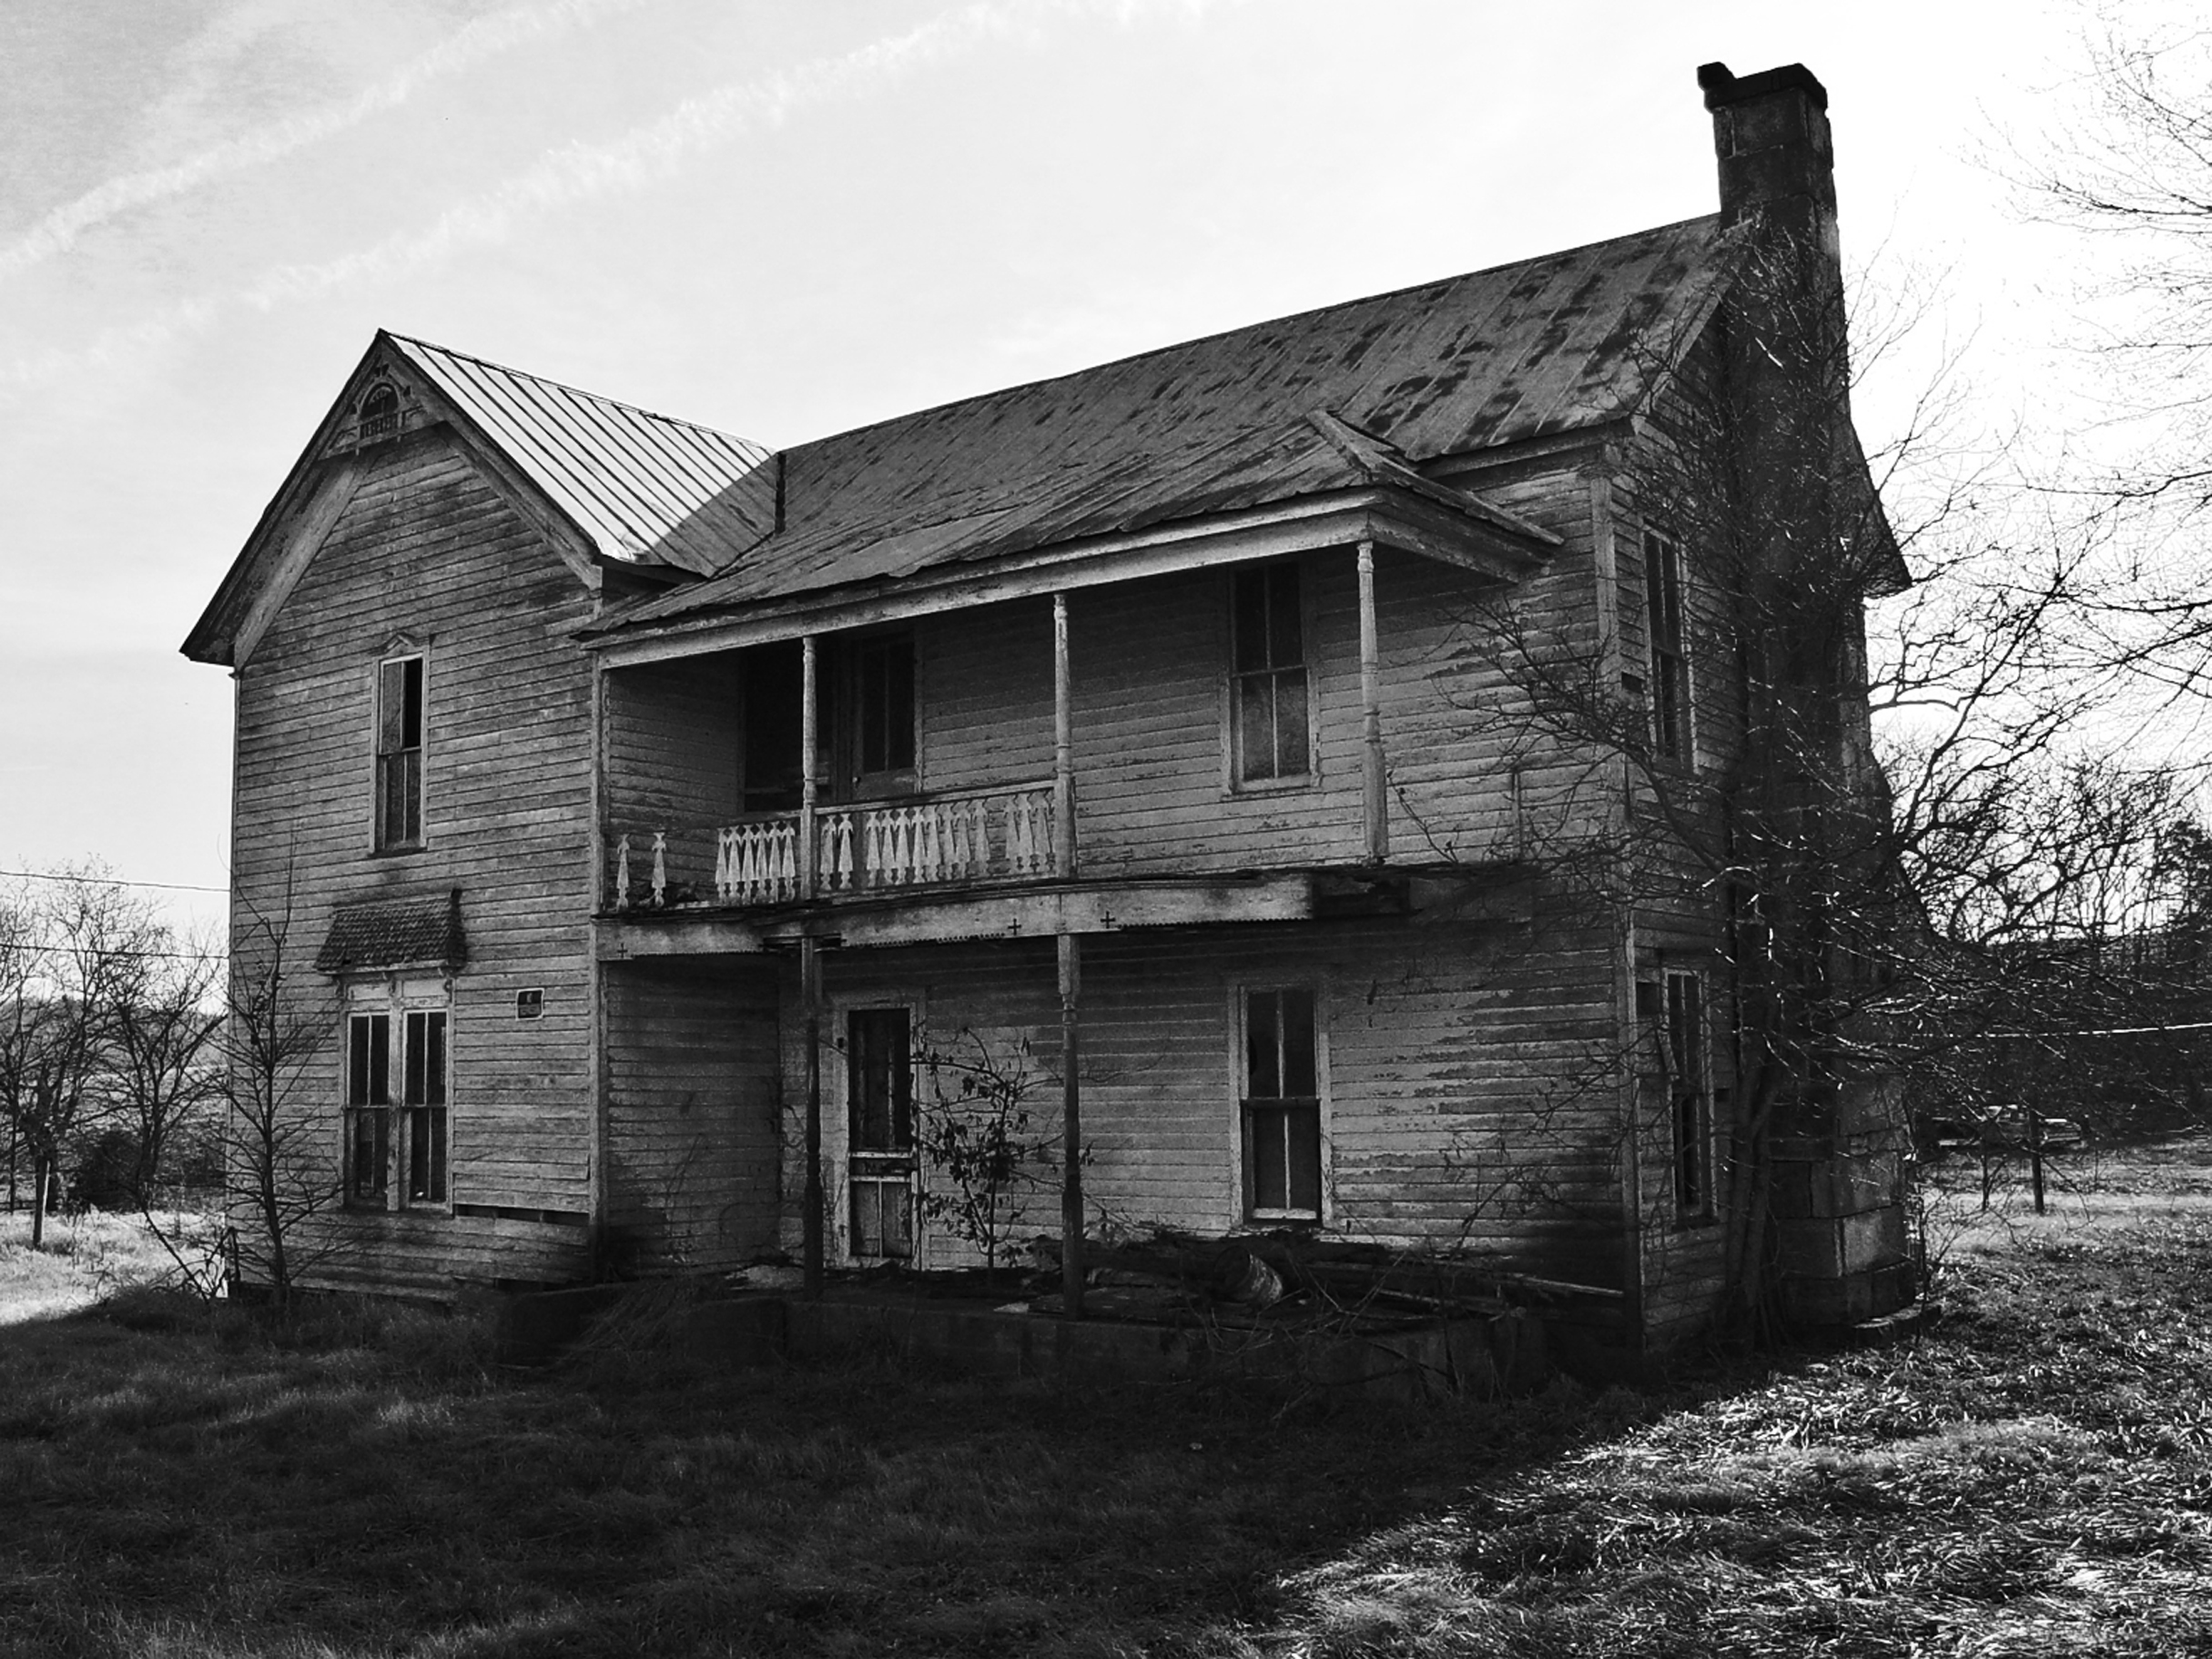    Abandoned Farm House  , Madison County, Arkansas, 2006. B&amp;W HDR digital image. 